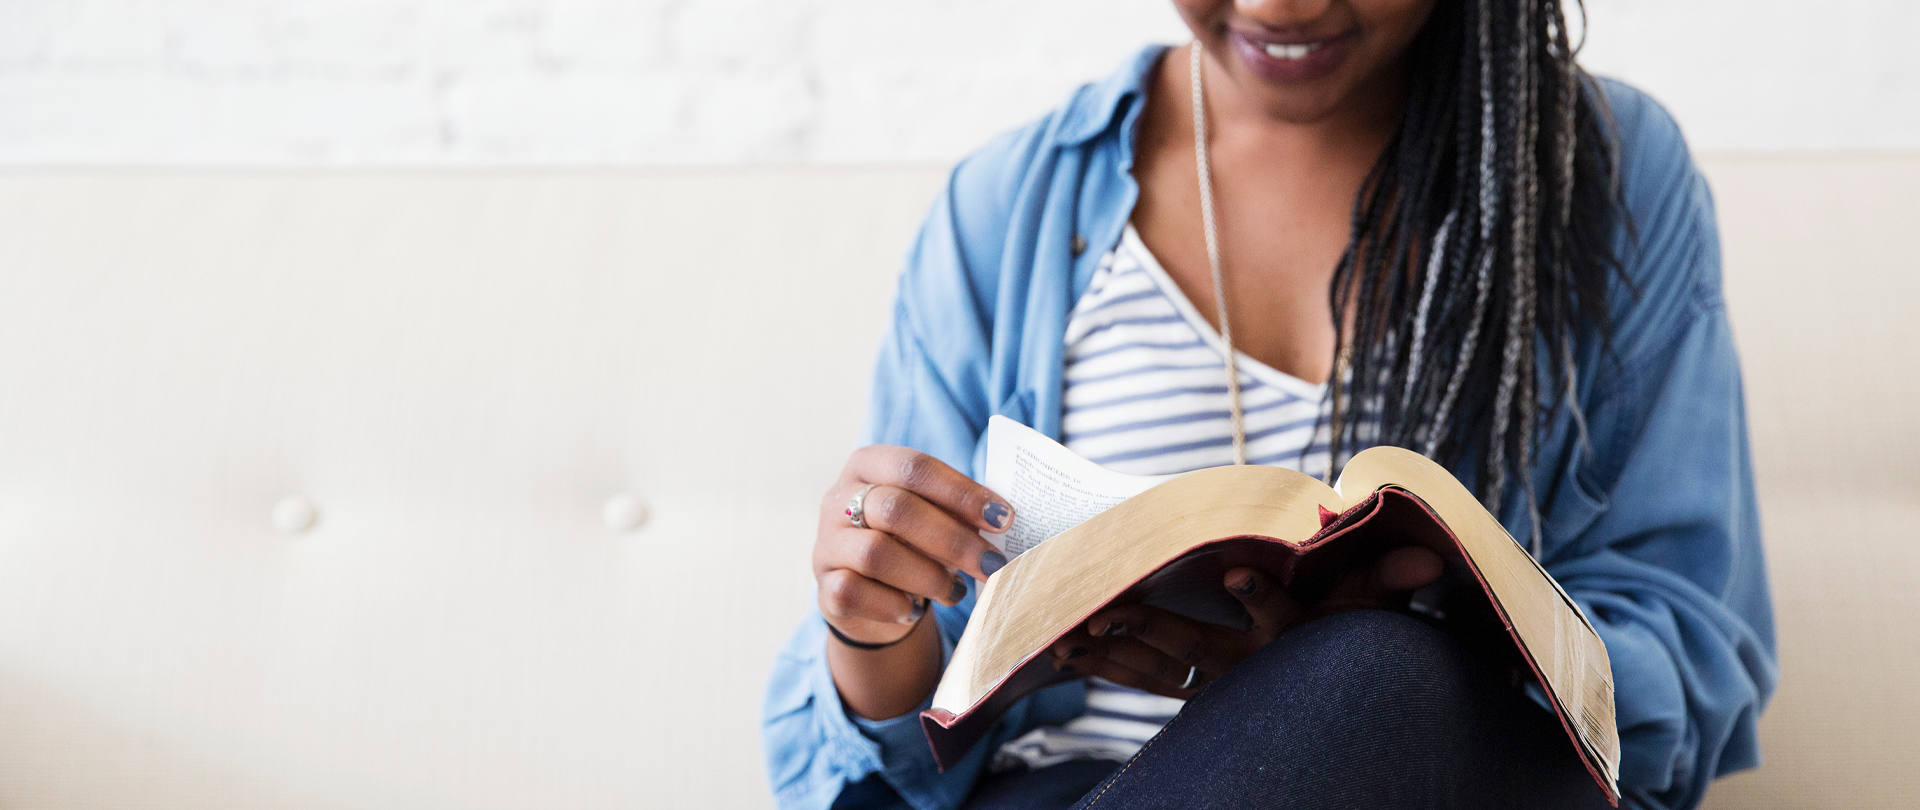 Women's Winter Bible Studies
Tuesdays, AM & PM options
 
